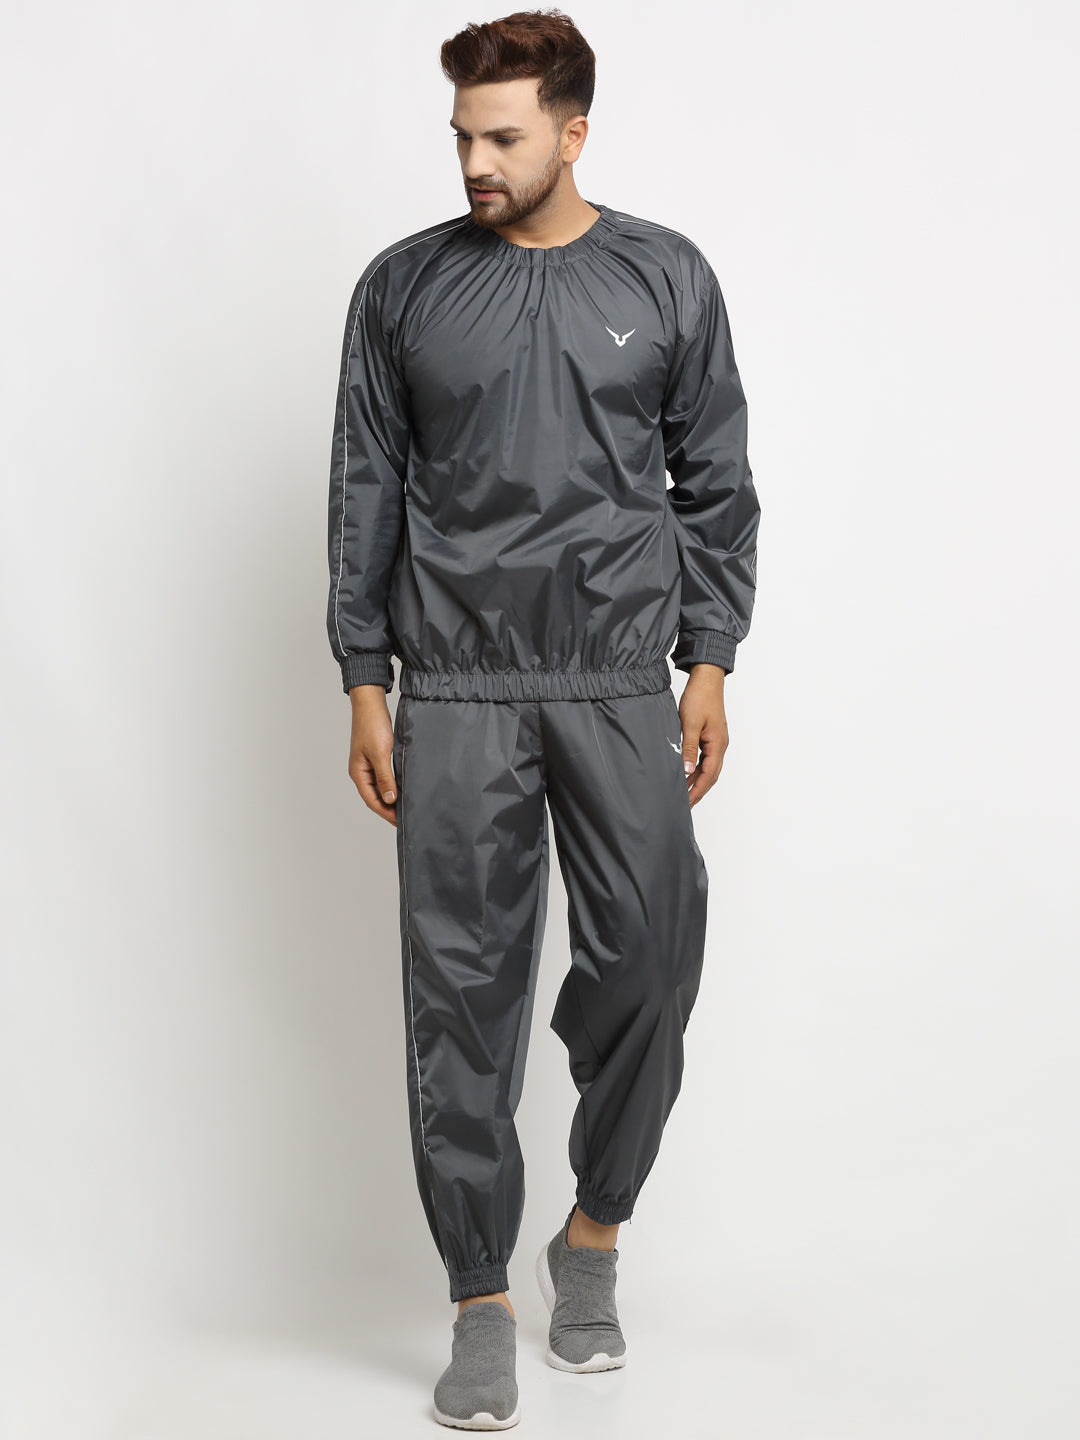 NINGMI Sauna Suit for Men Hot Sweat Suit Neoprene India